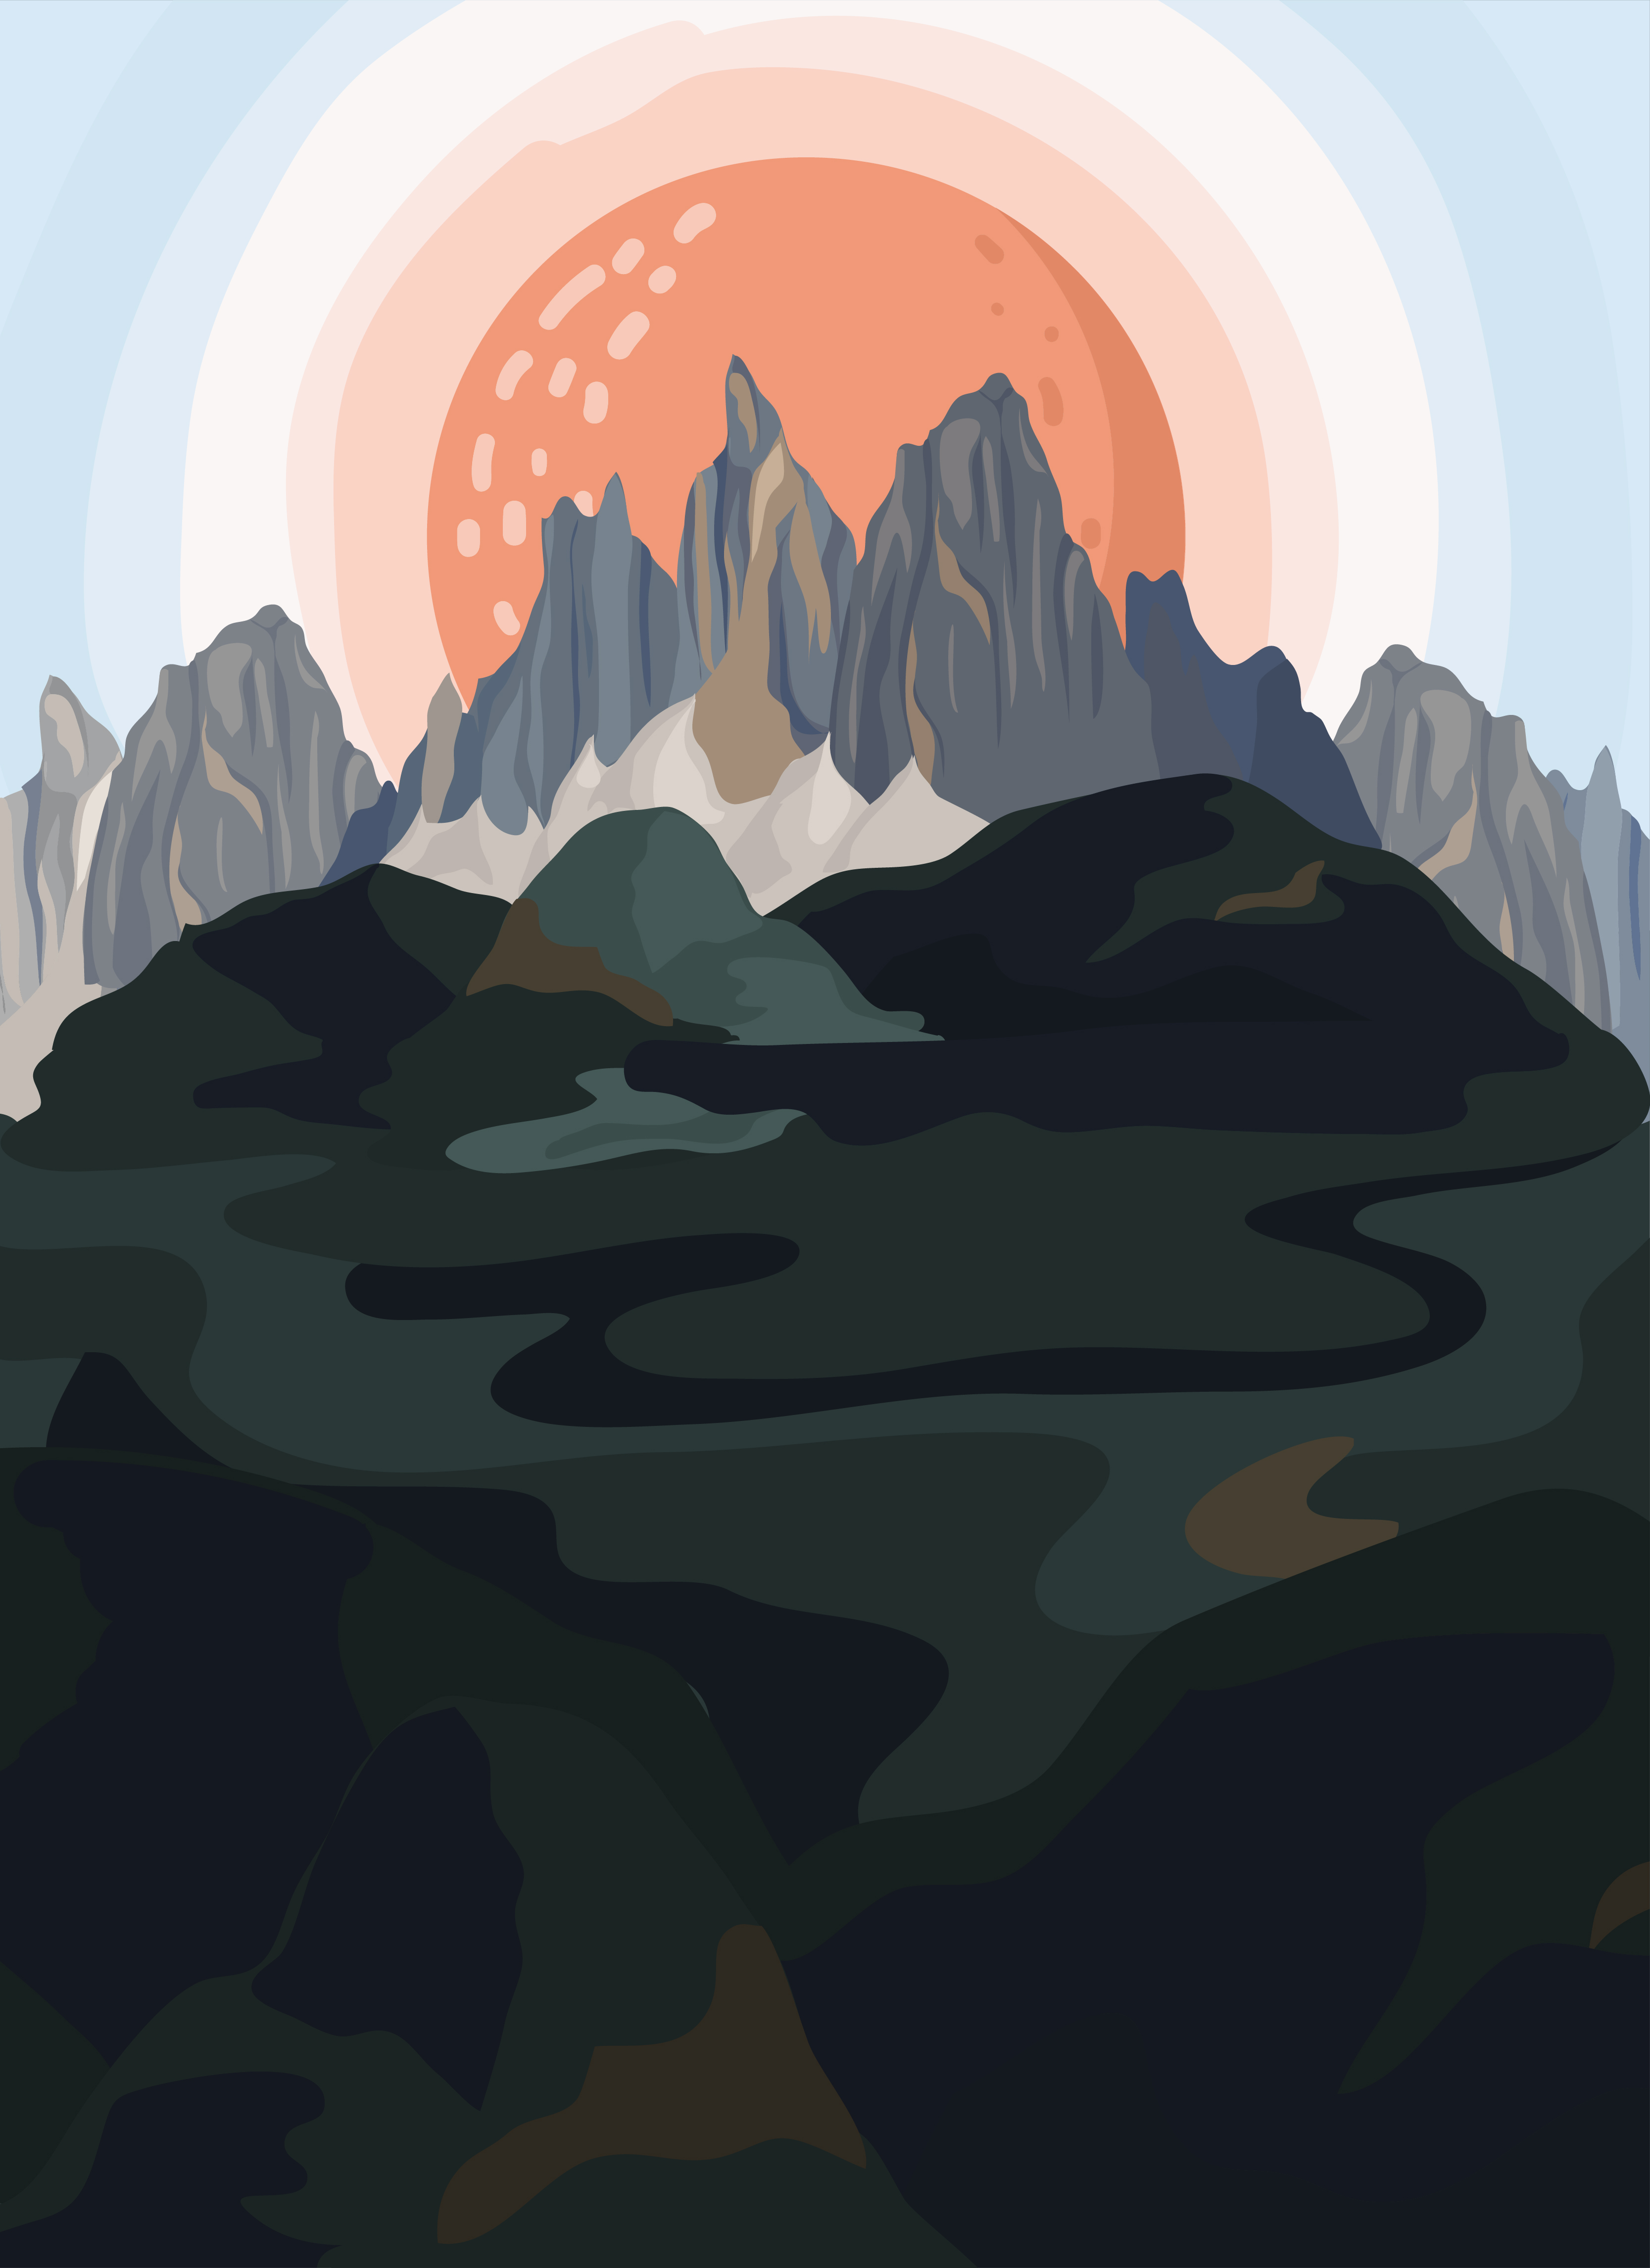 Painted mountain view landscape illustration - Download Free Vectors